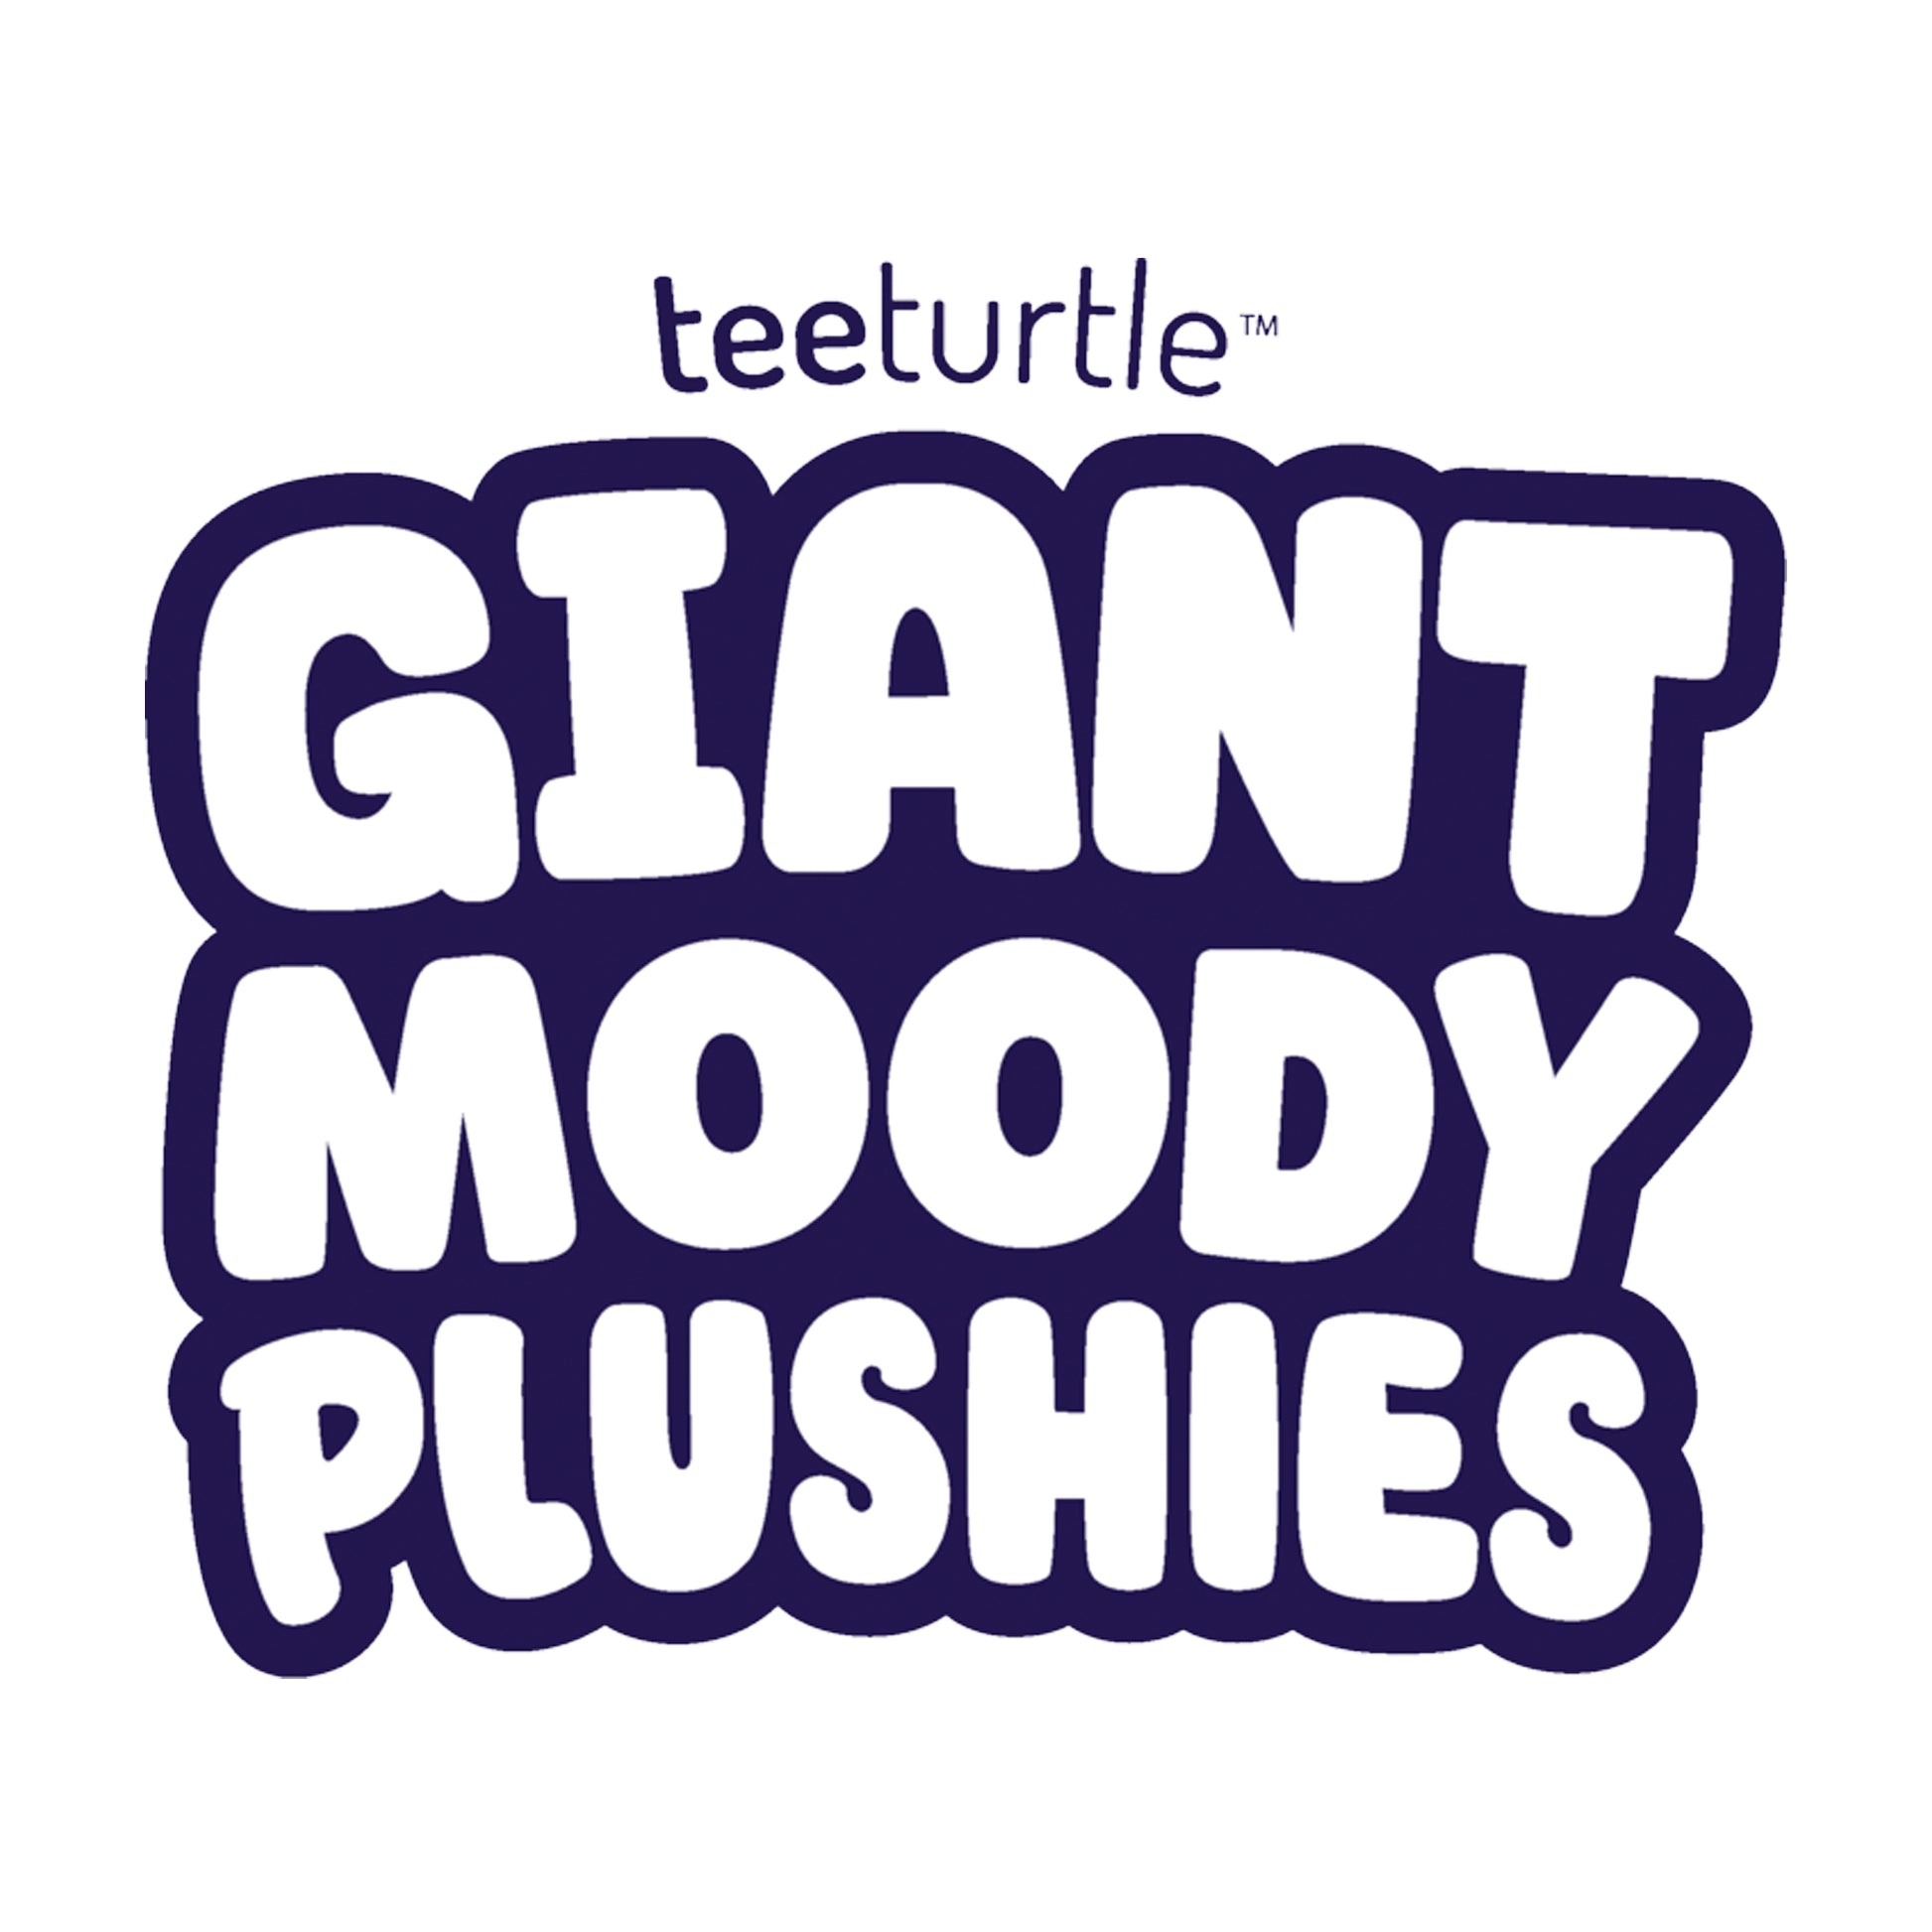 TeeTurtle Giant Moody Axolotl Plushies.